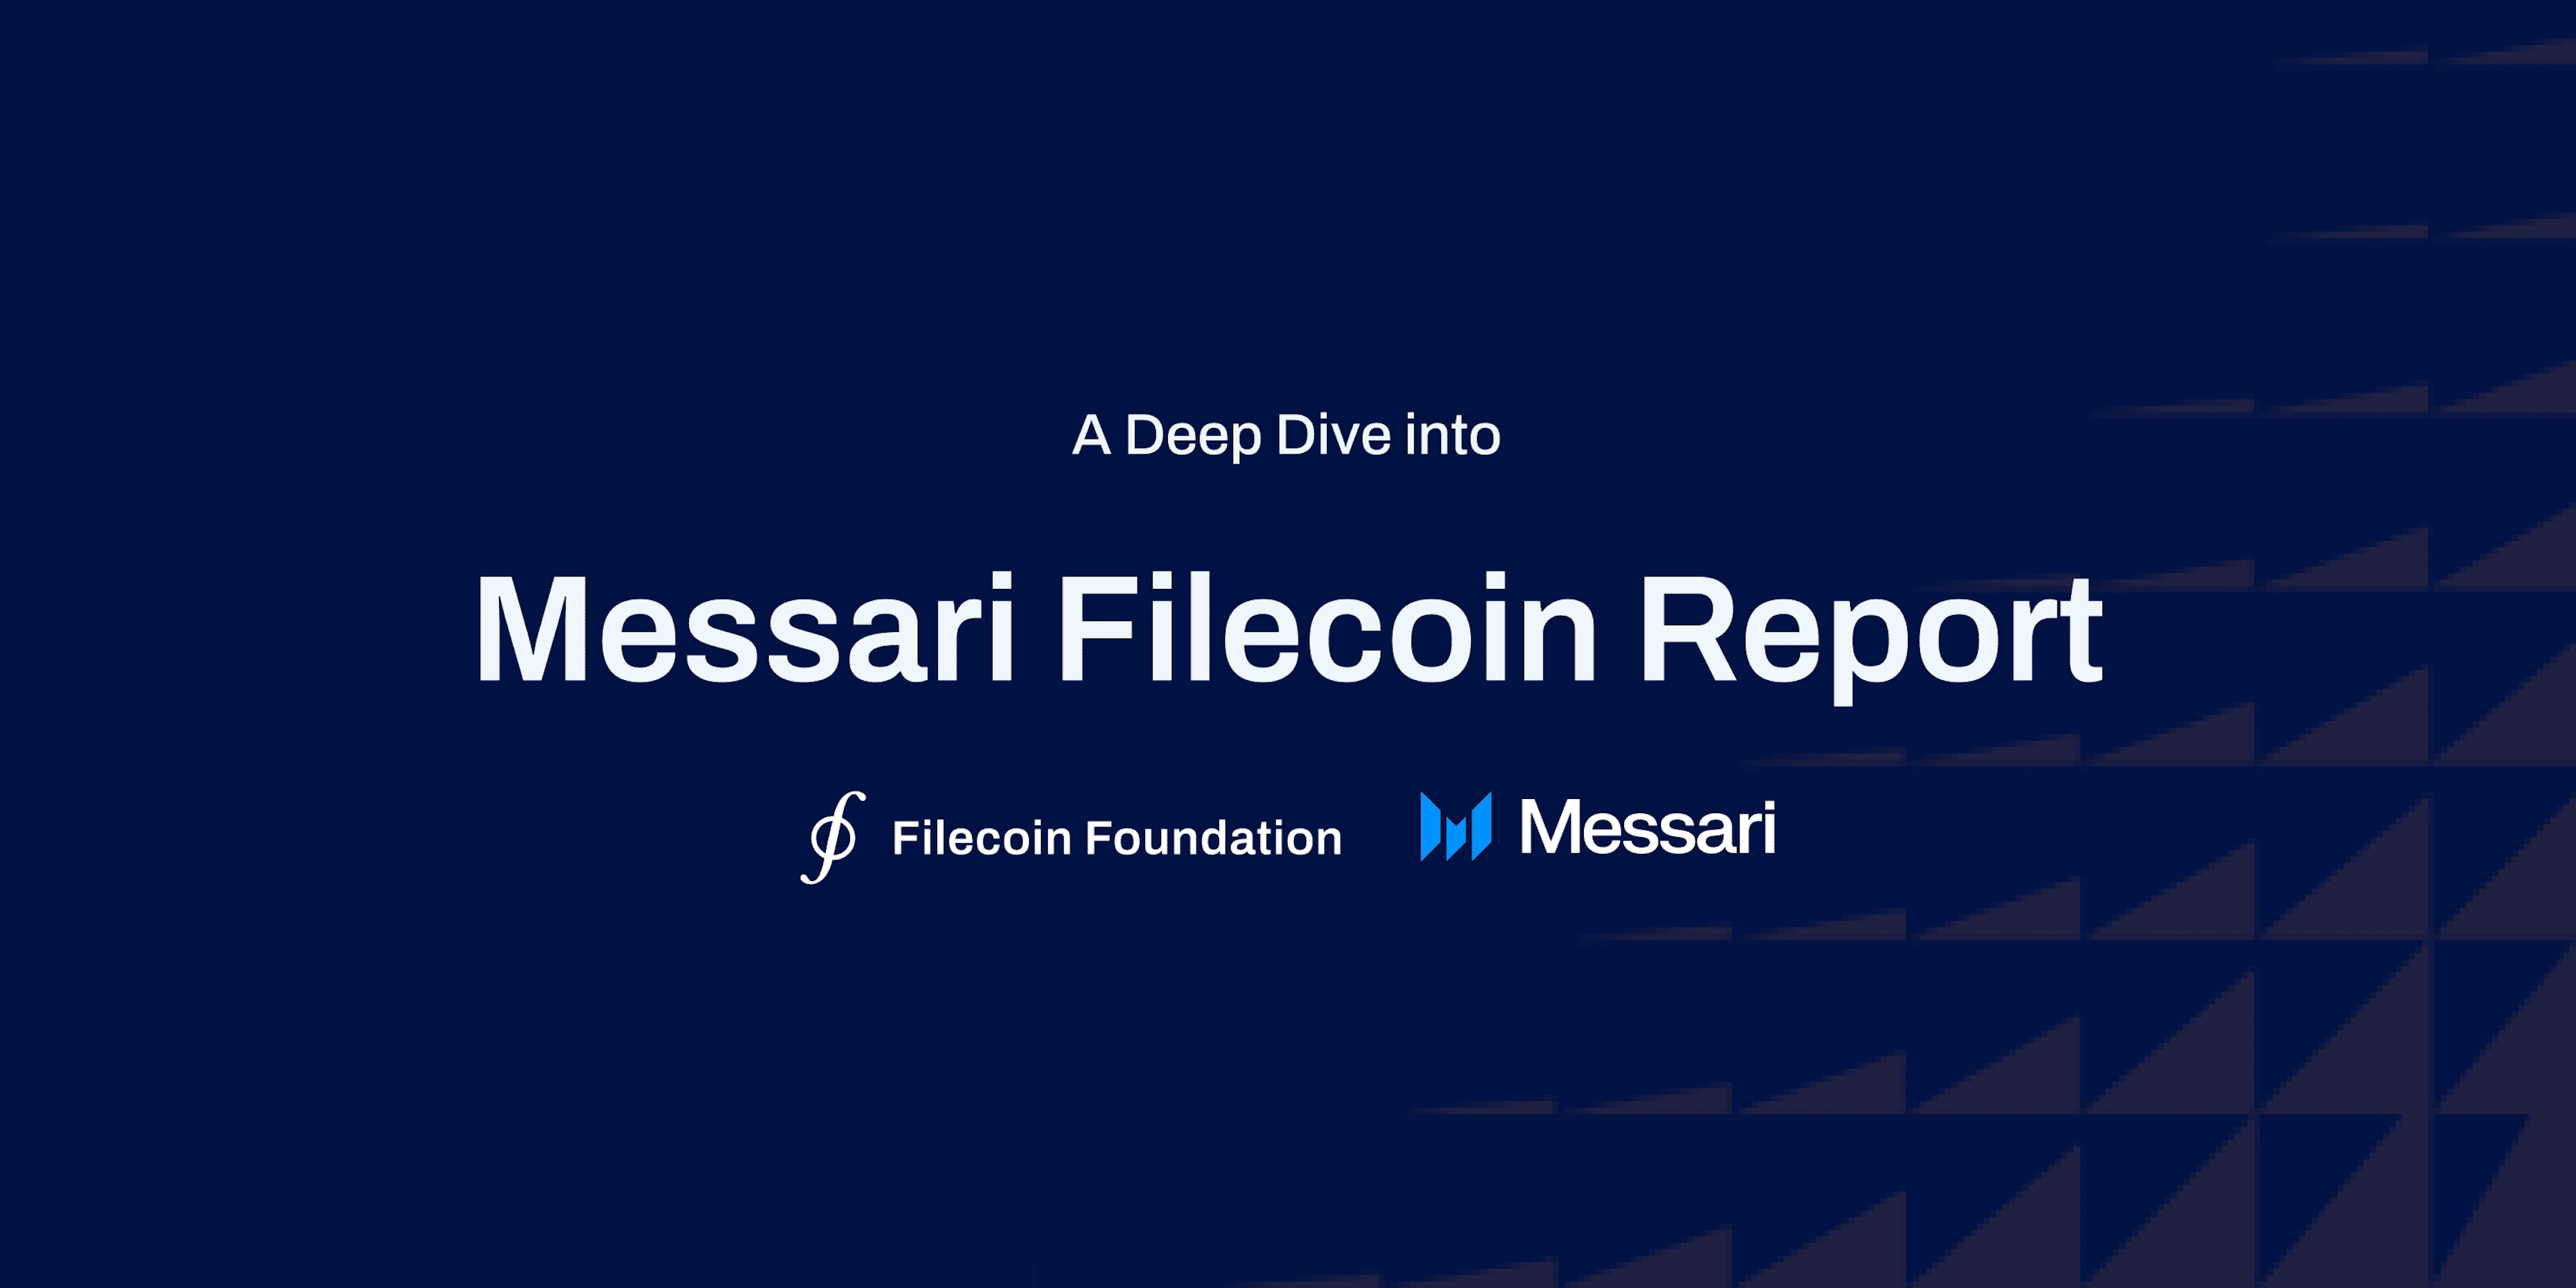 Messari Filecoin Report